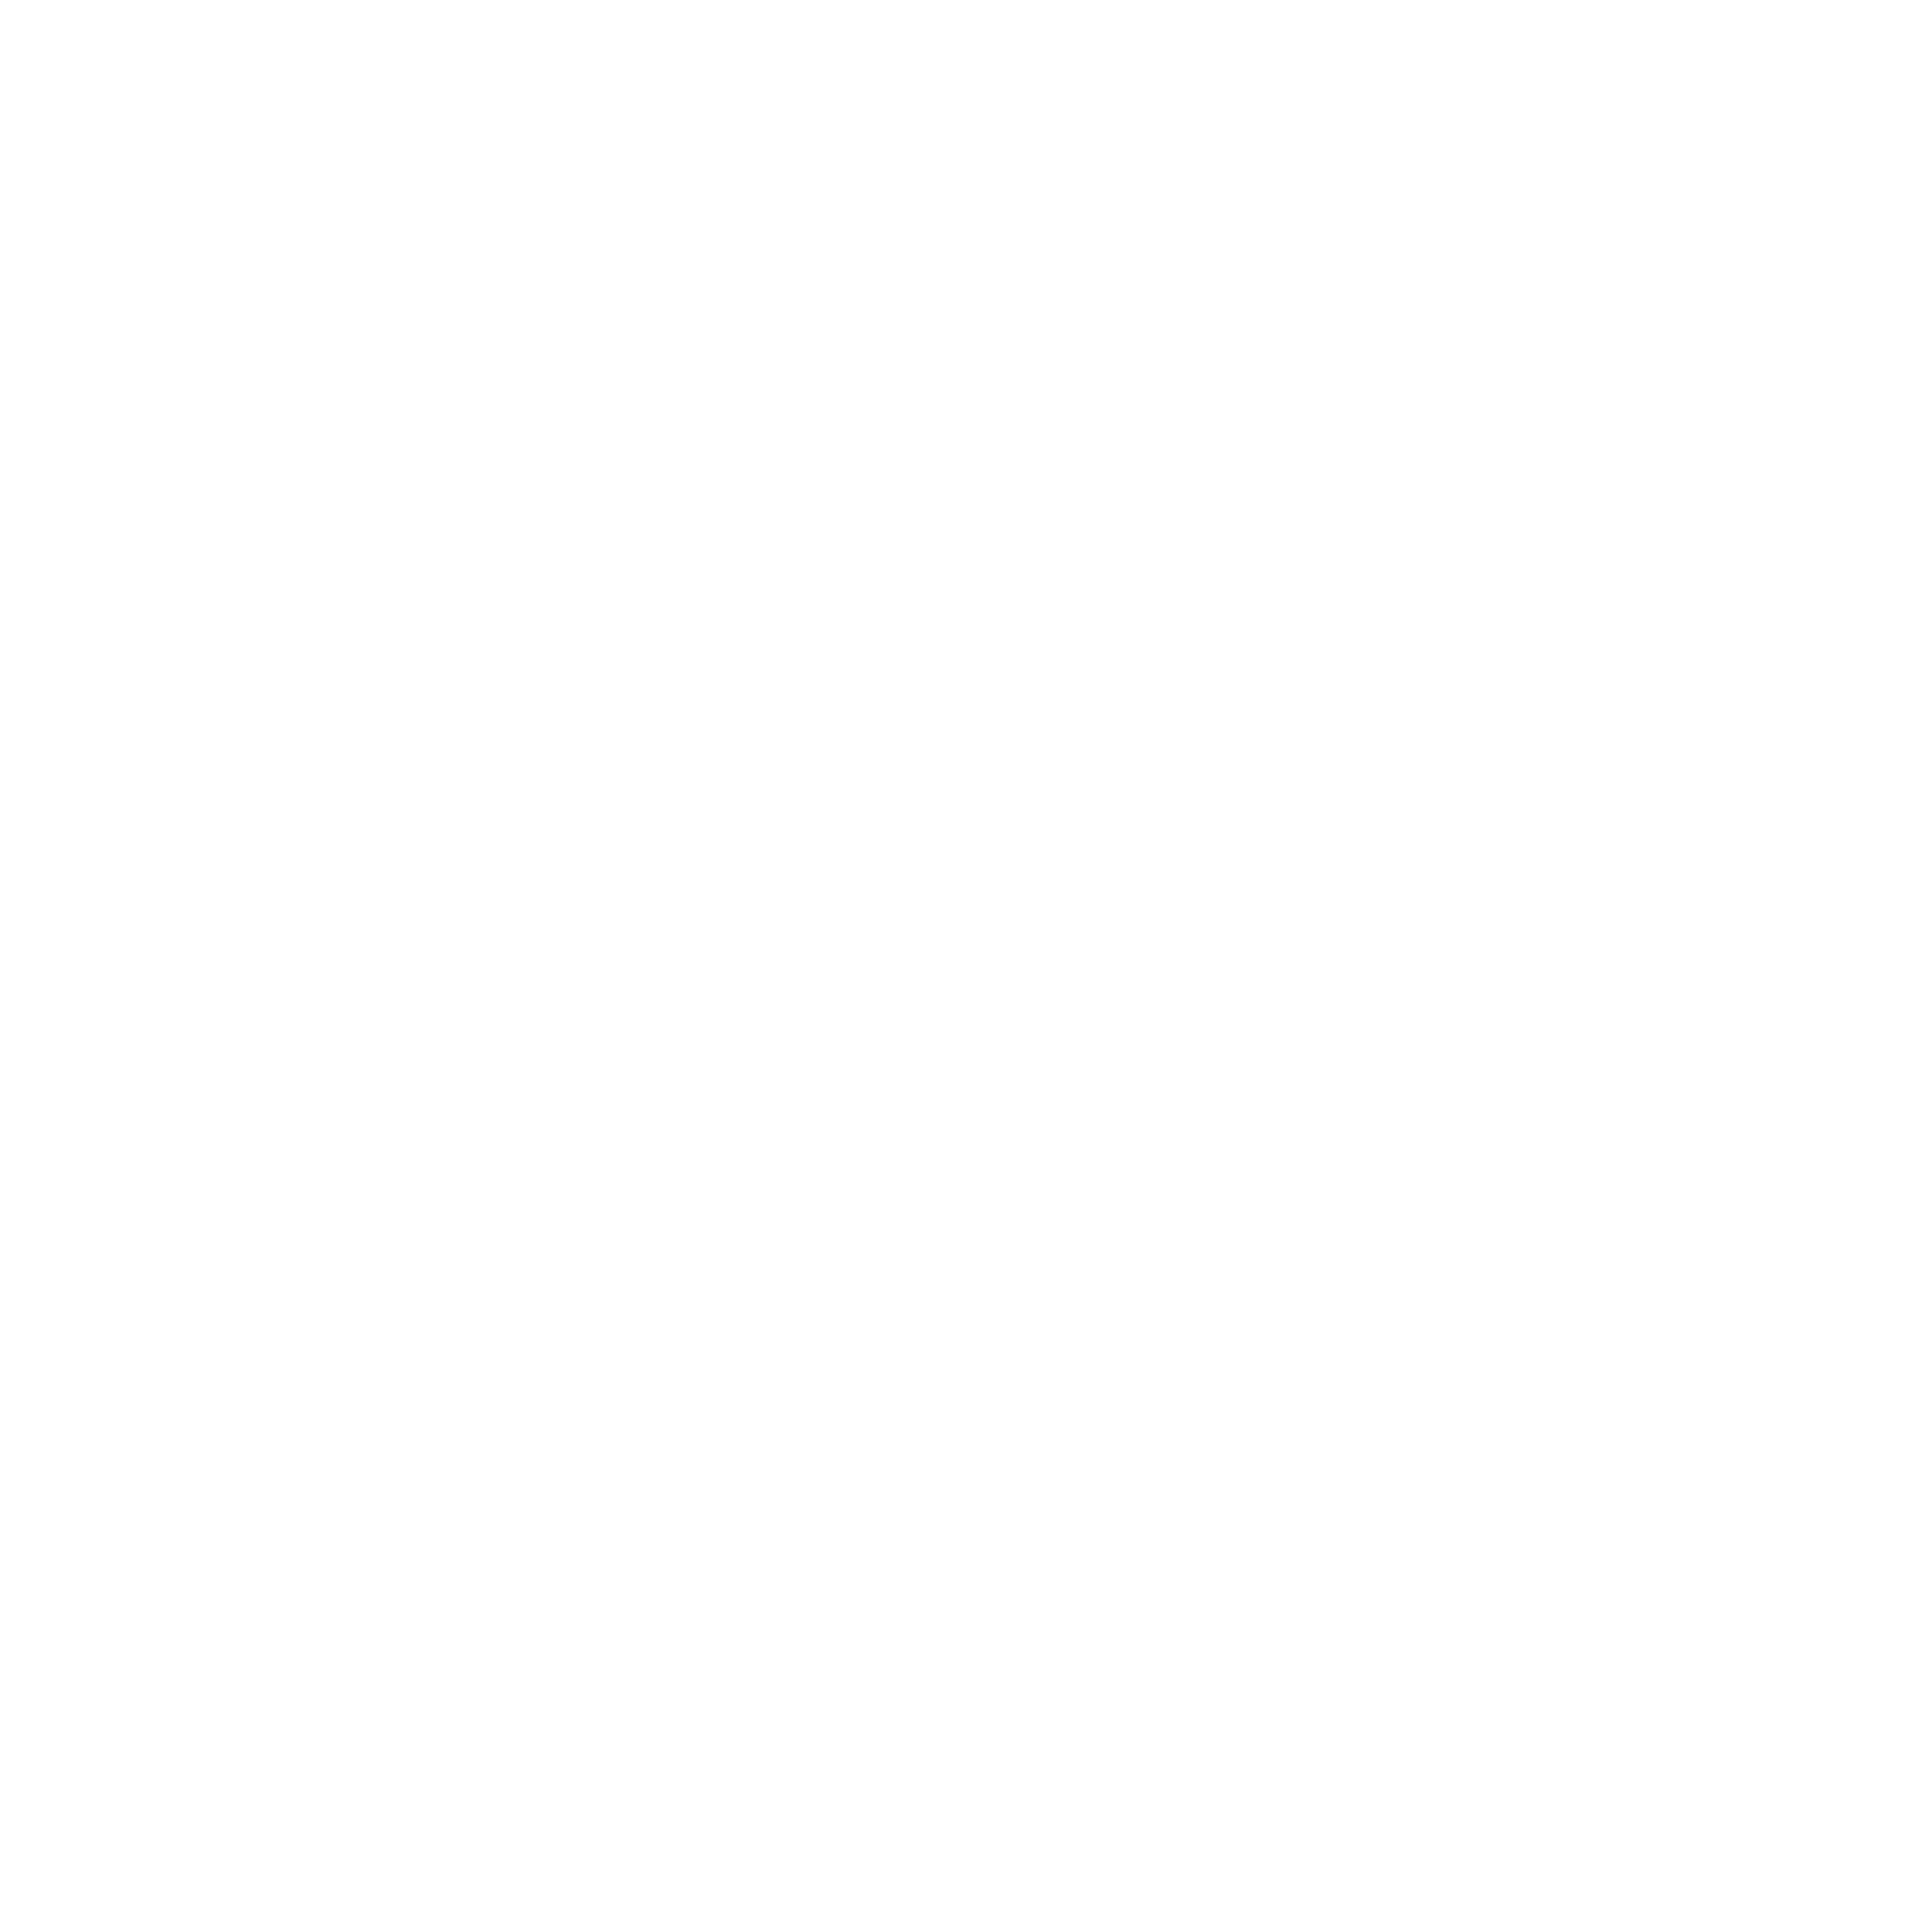 Black and White Team Logo - TeamUSA | Home